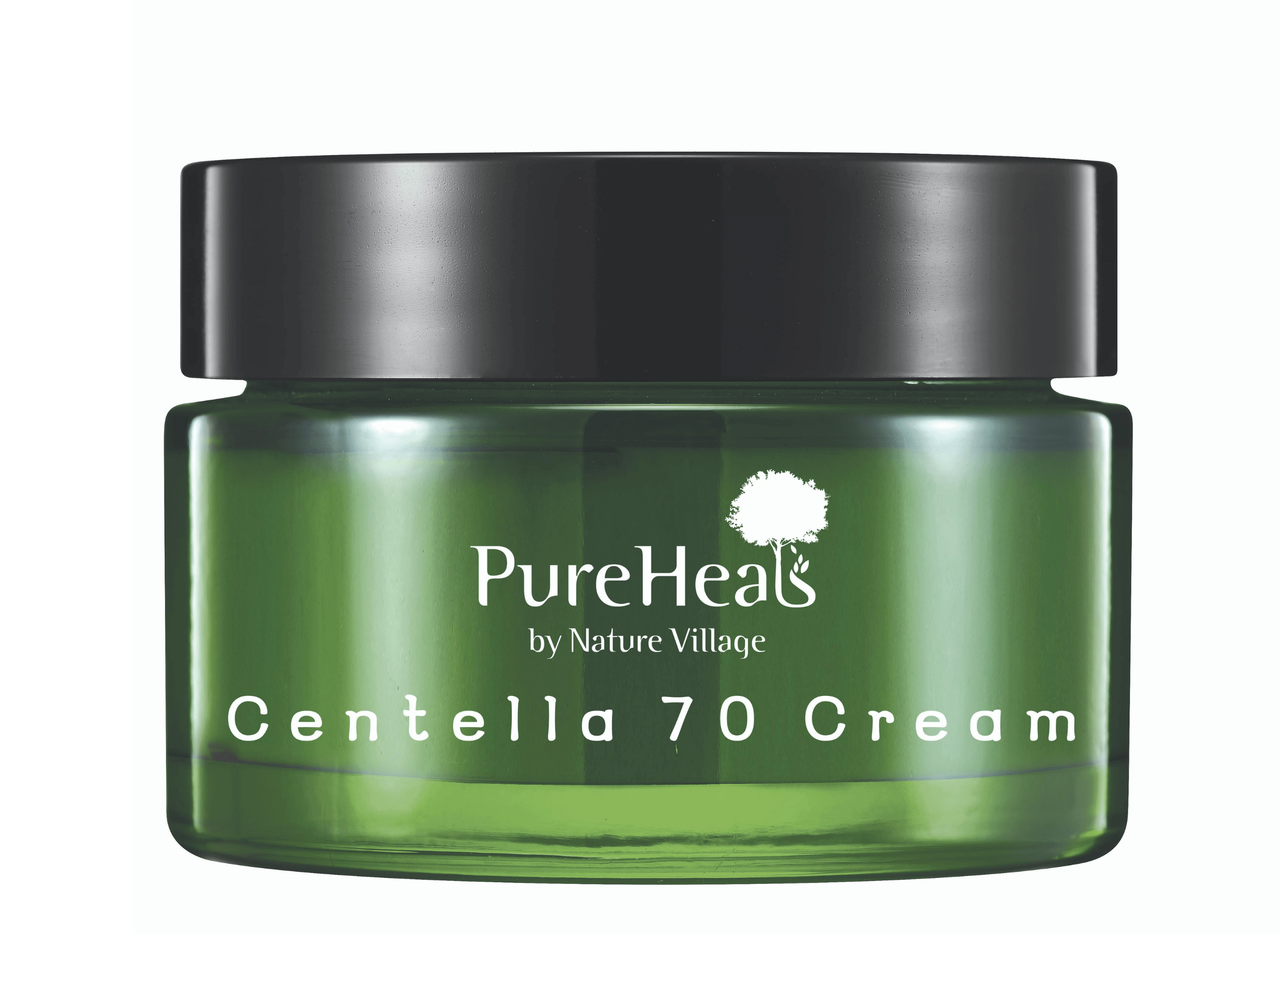 Centella 70 Cream - Plump Shop